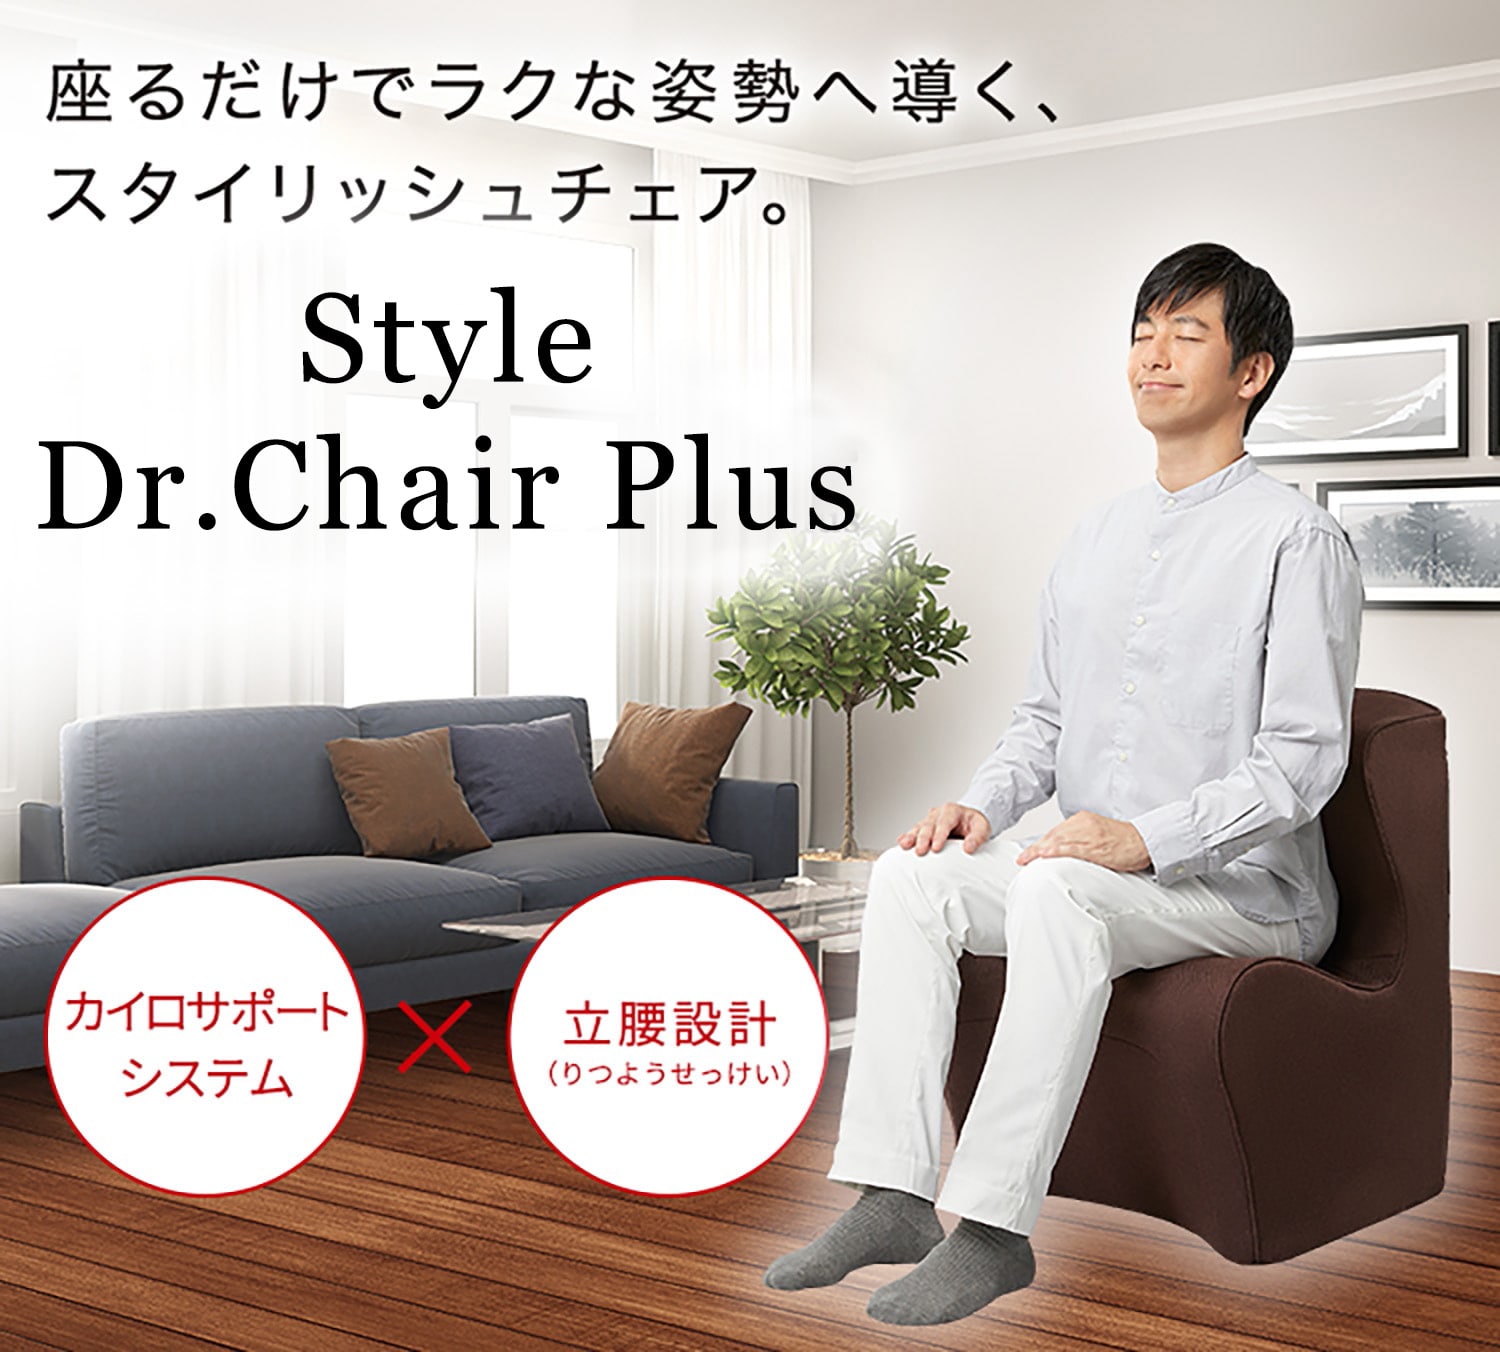 Style Dr.CHAIR Plus,スタイル ドクターチェアプラス